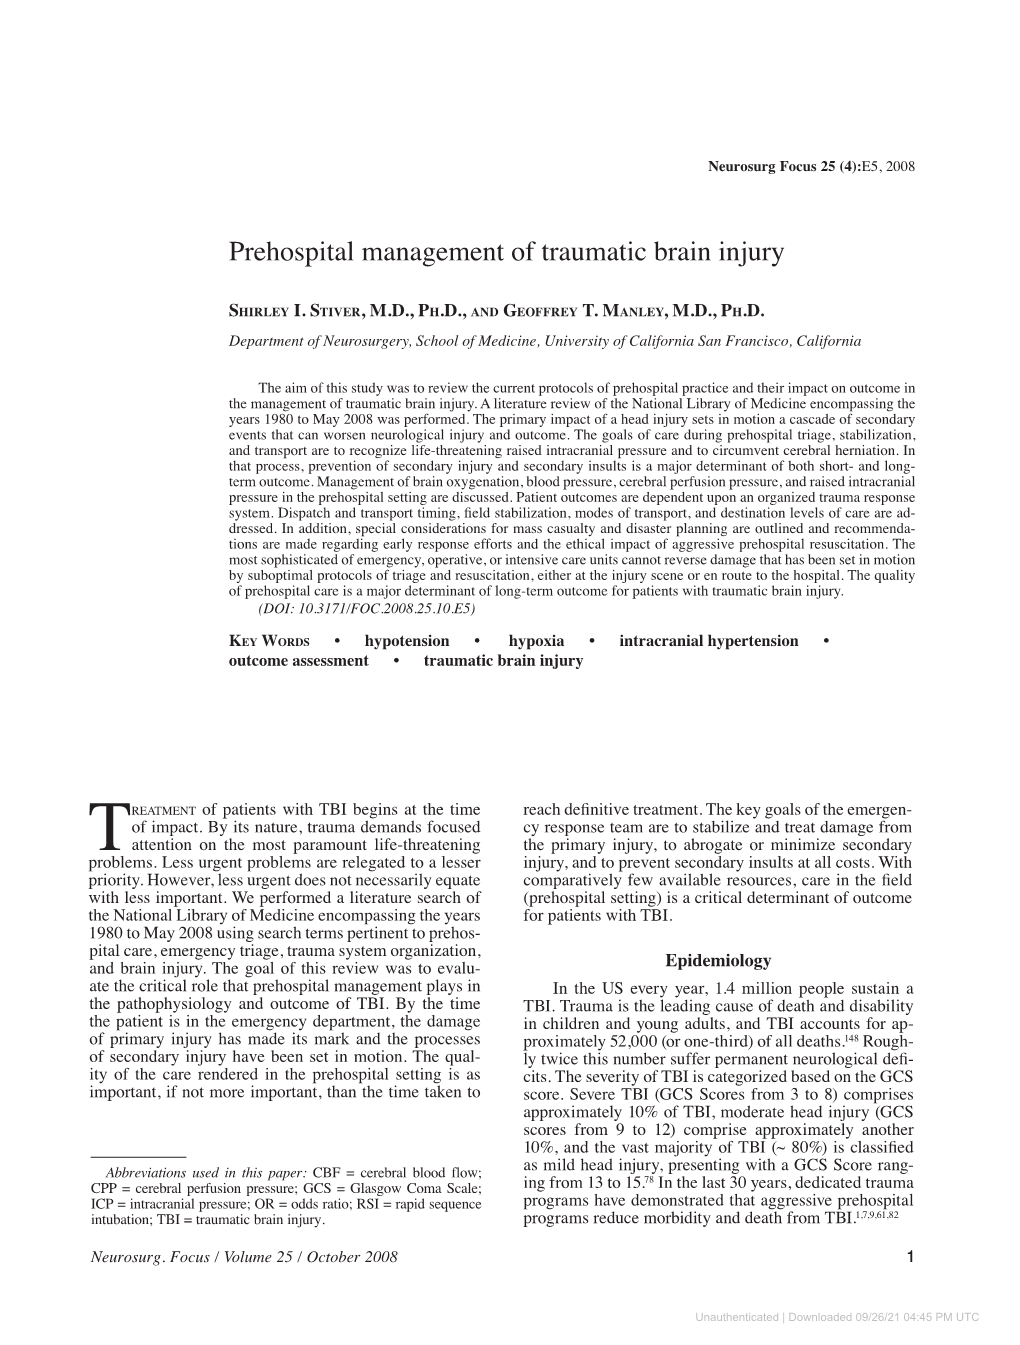 Prehospital Management of Traumatic Brain Injury